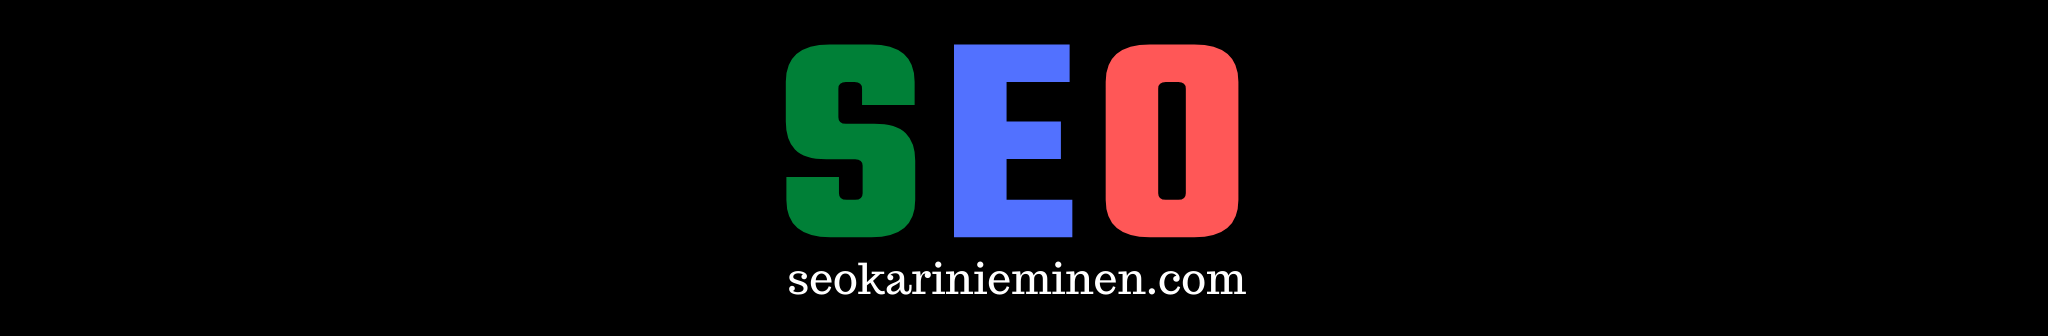 SEO Kari Nieminen's profile banner